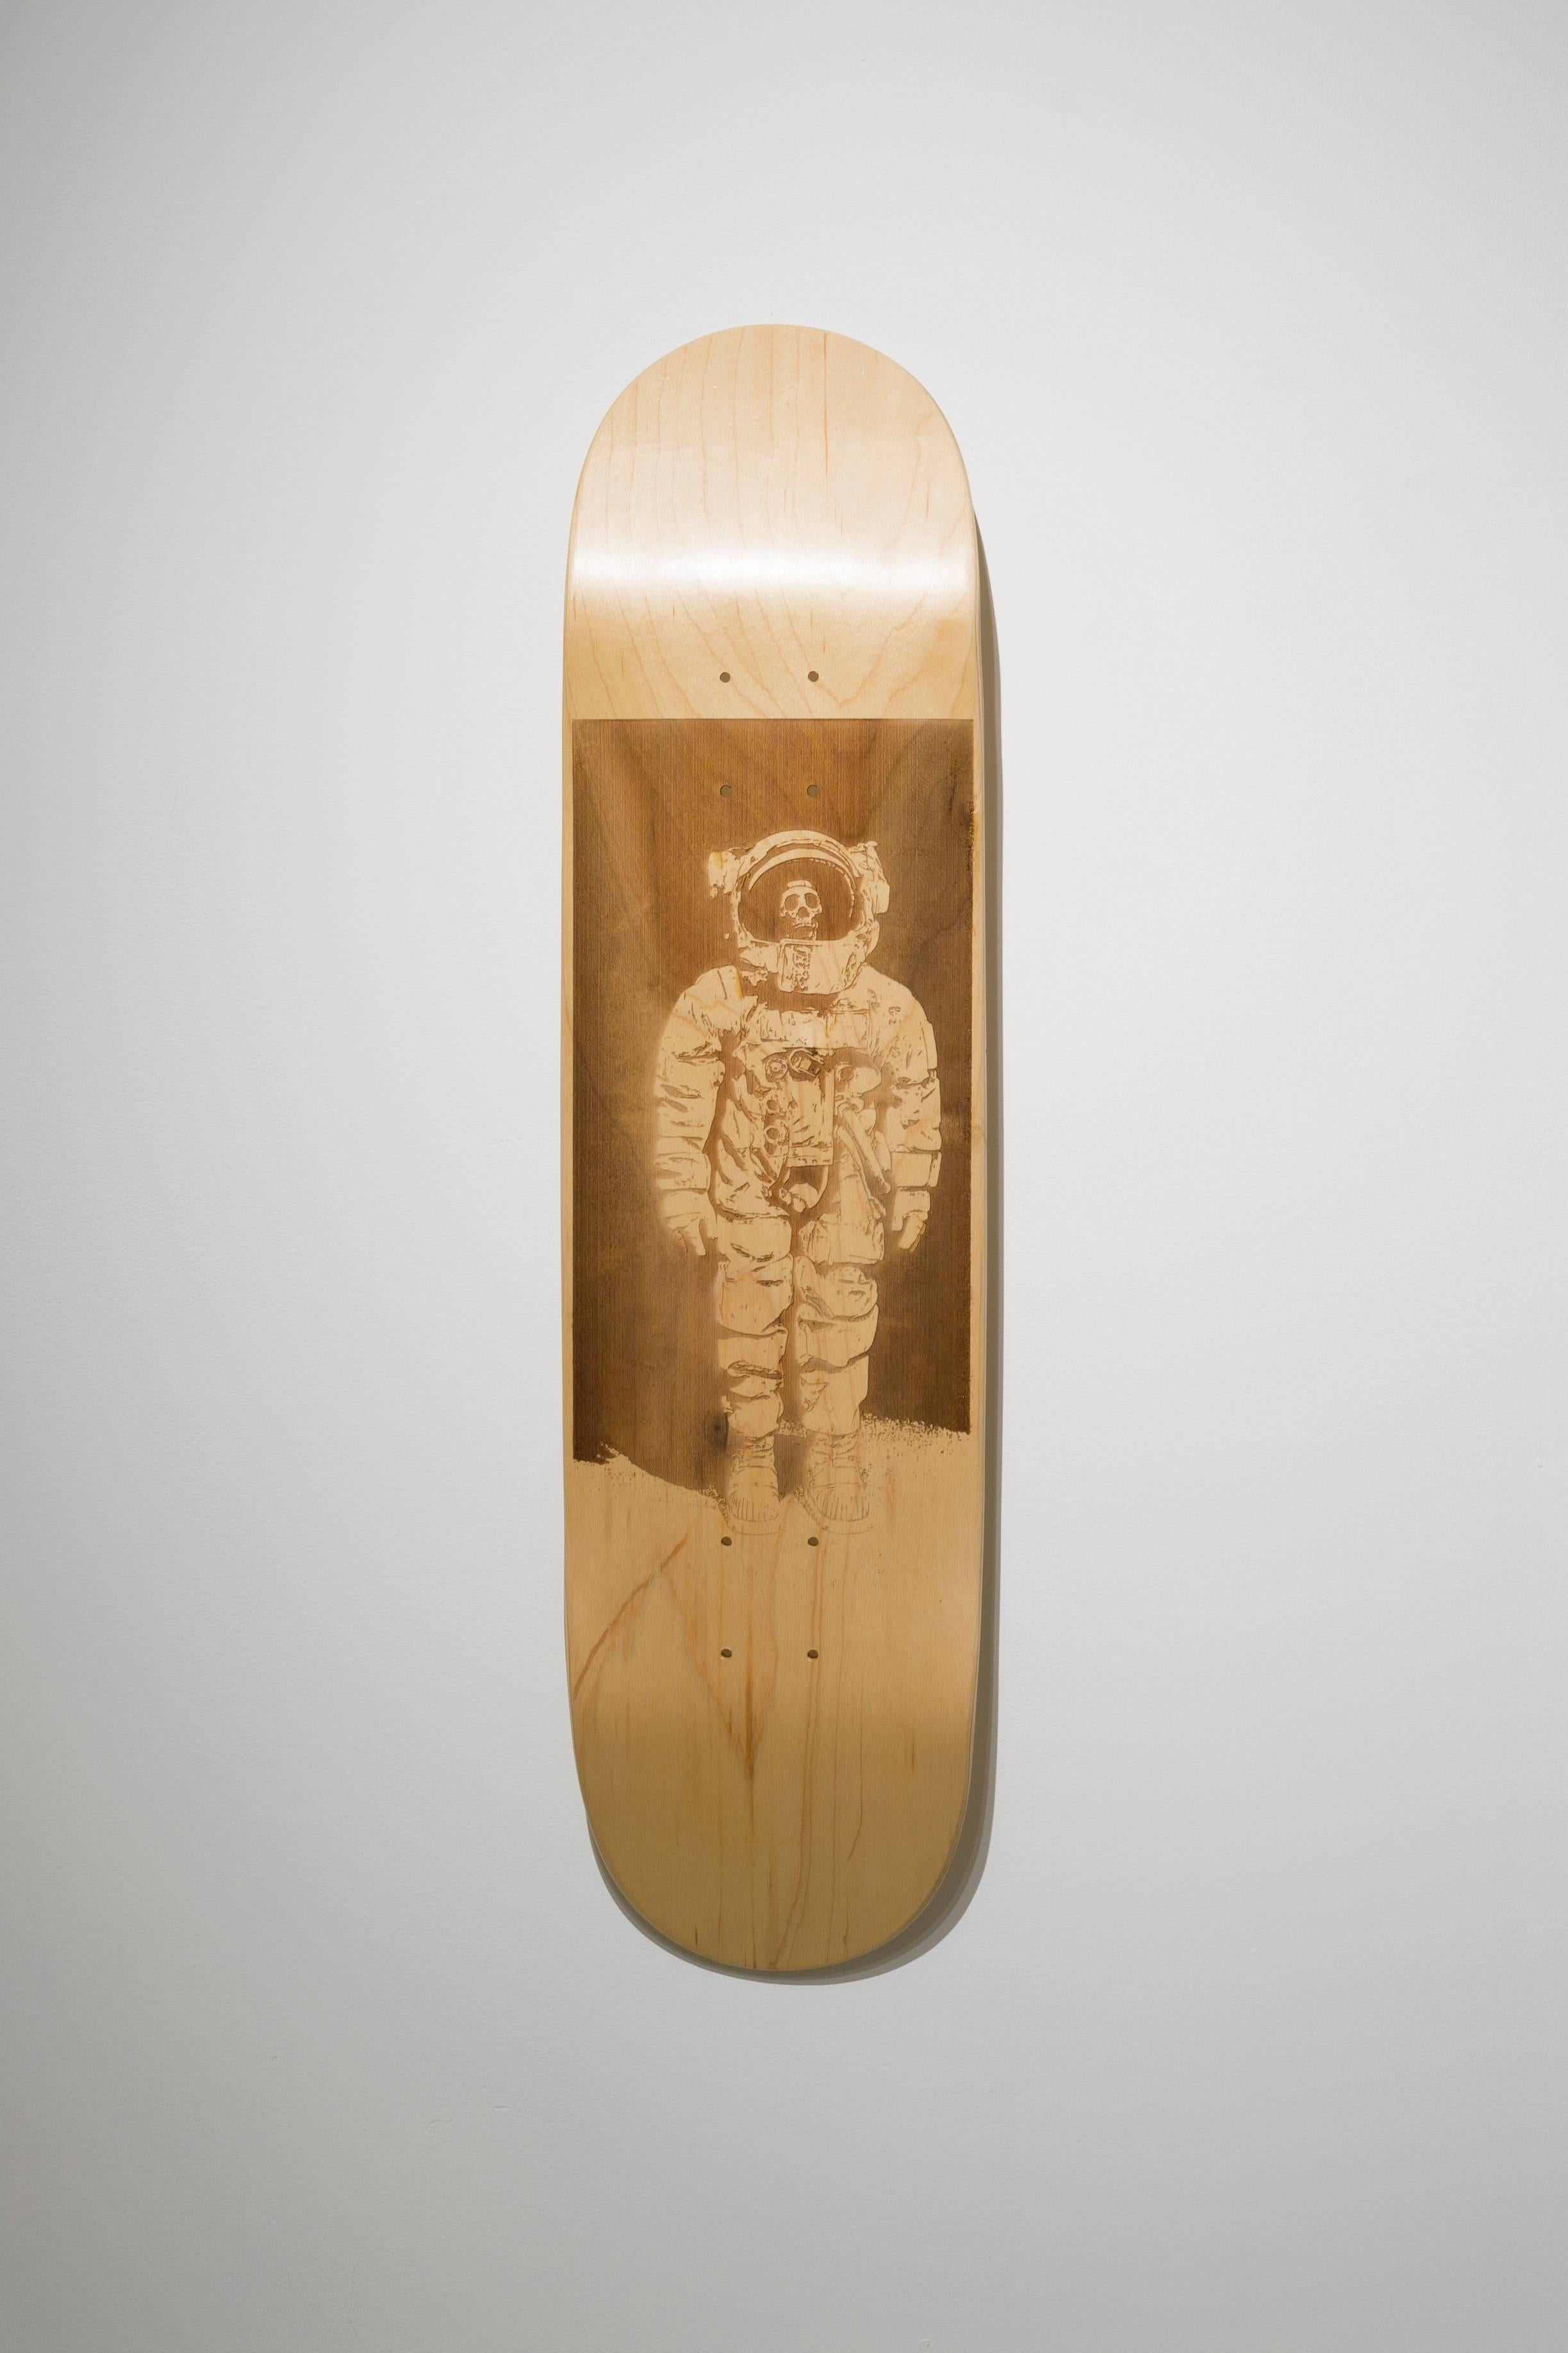 Brandon Vickerd Figurative Sculpture - Dead Astronaut from the series Skateboard Deck